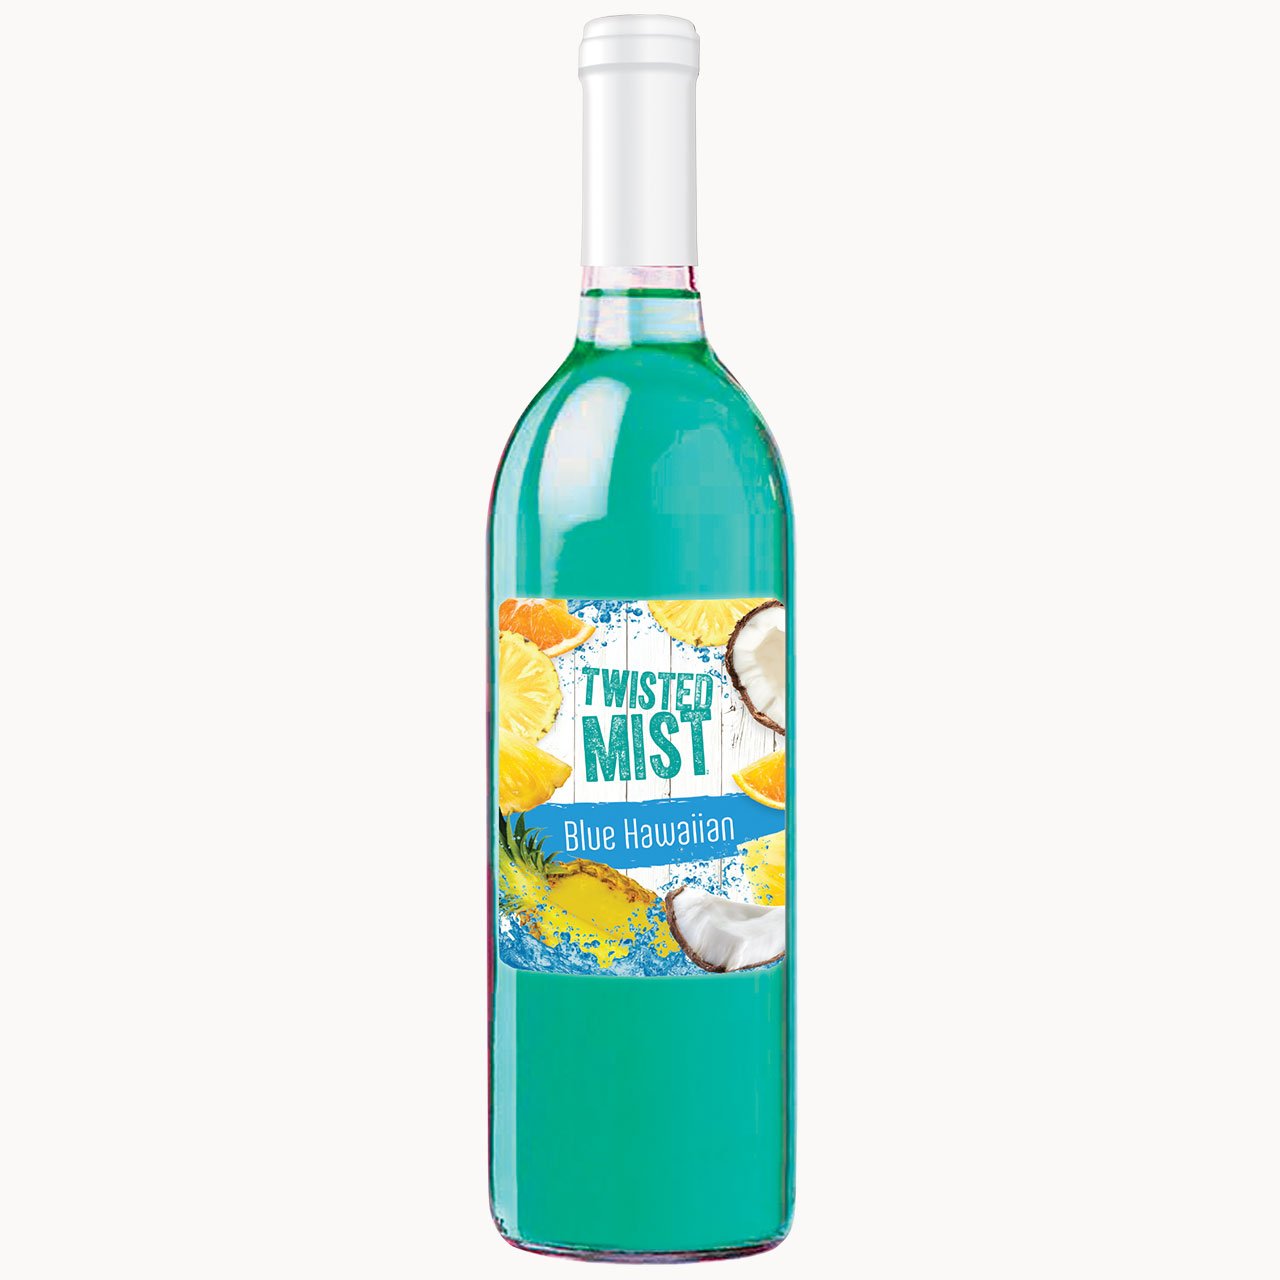 Blue Hawaiian Wine Cocktail Recipe Kit - Winexpert Twisted Mist Limited Edition - Preorder